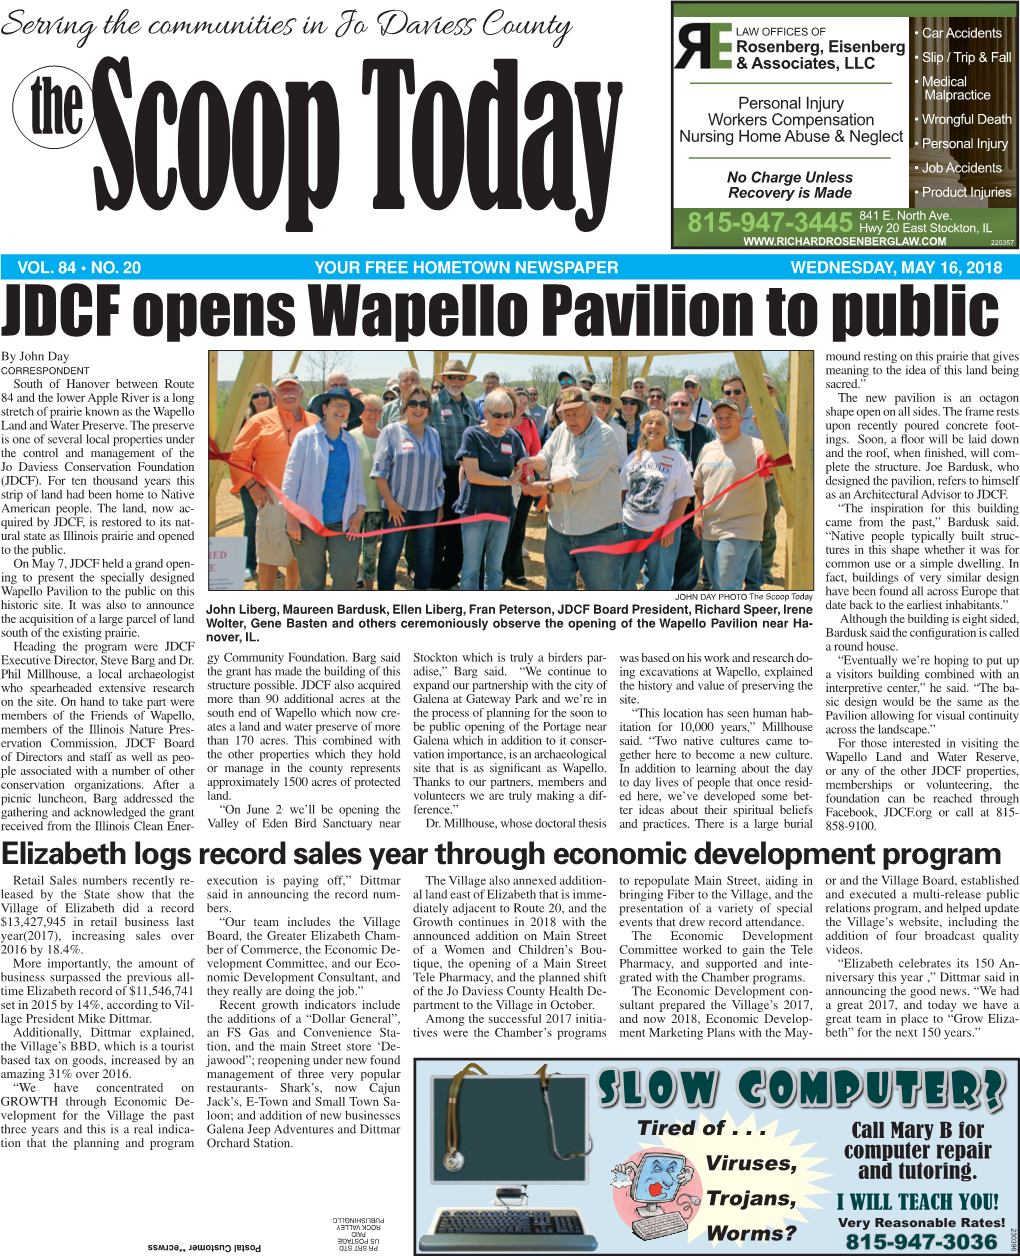 JDCF Opens Wapello Pavilion to Public